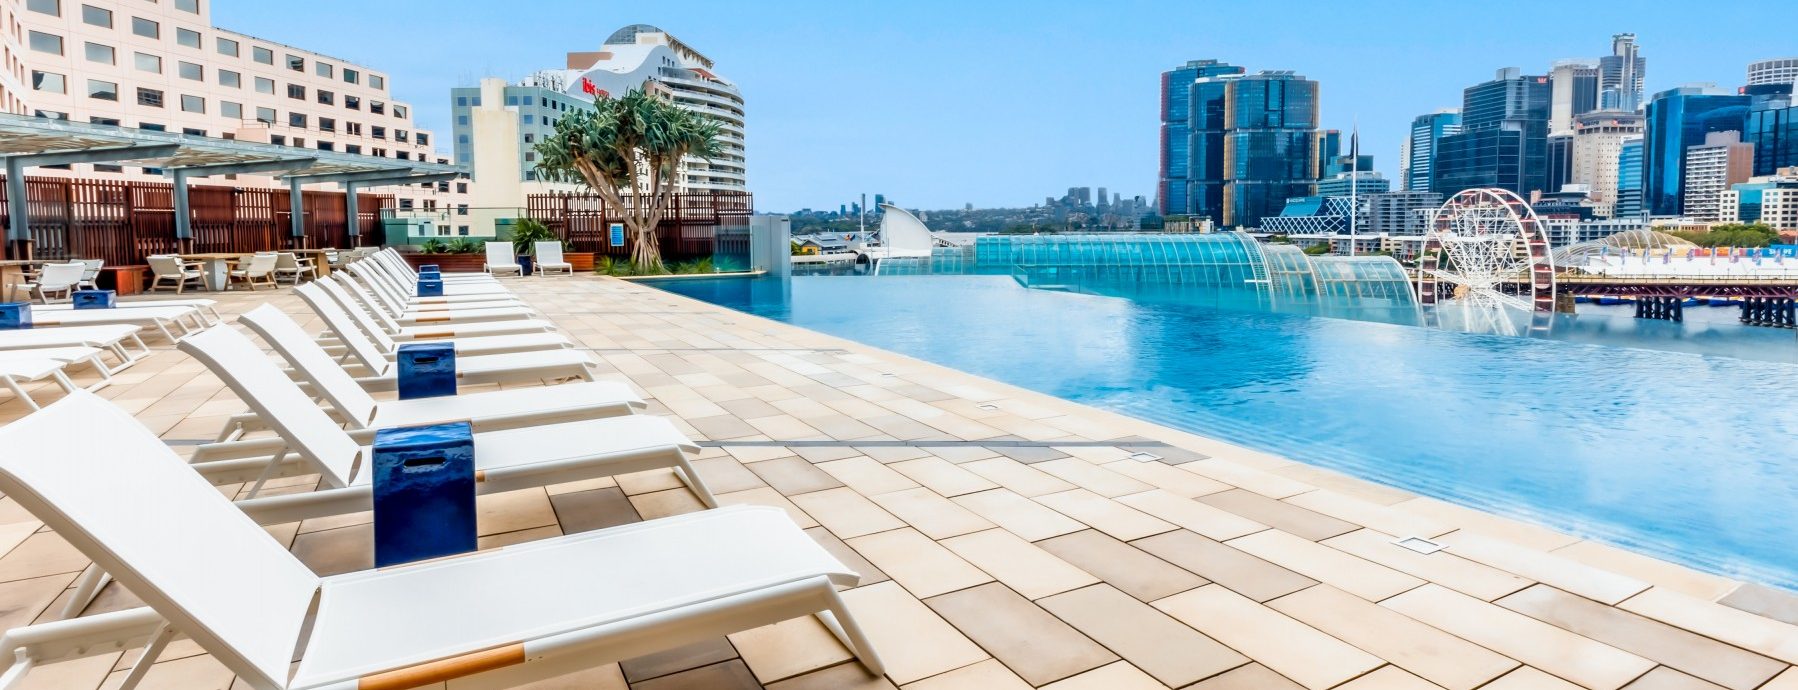 sofitel-sydney-darling-harbour-hotel-pool-deck-looking-in3